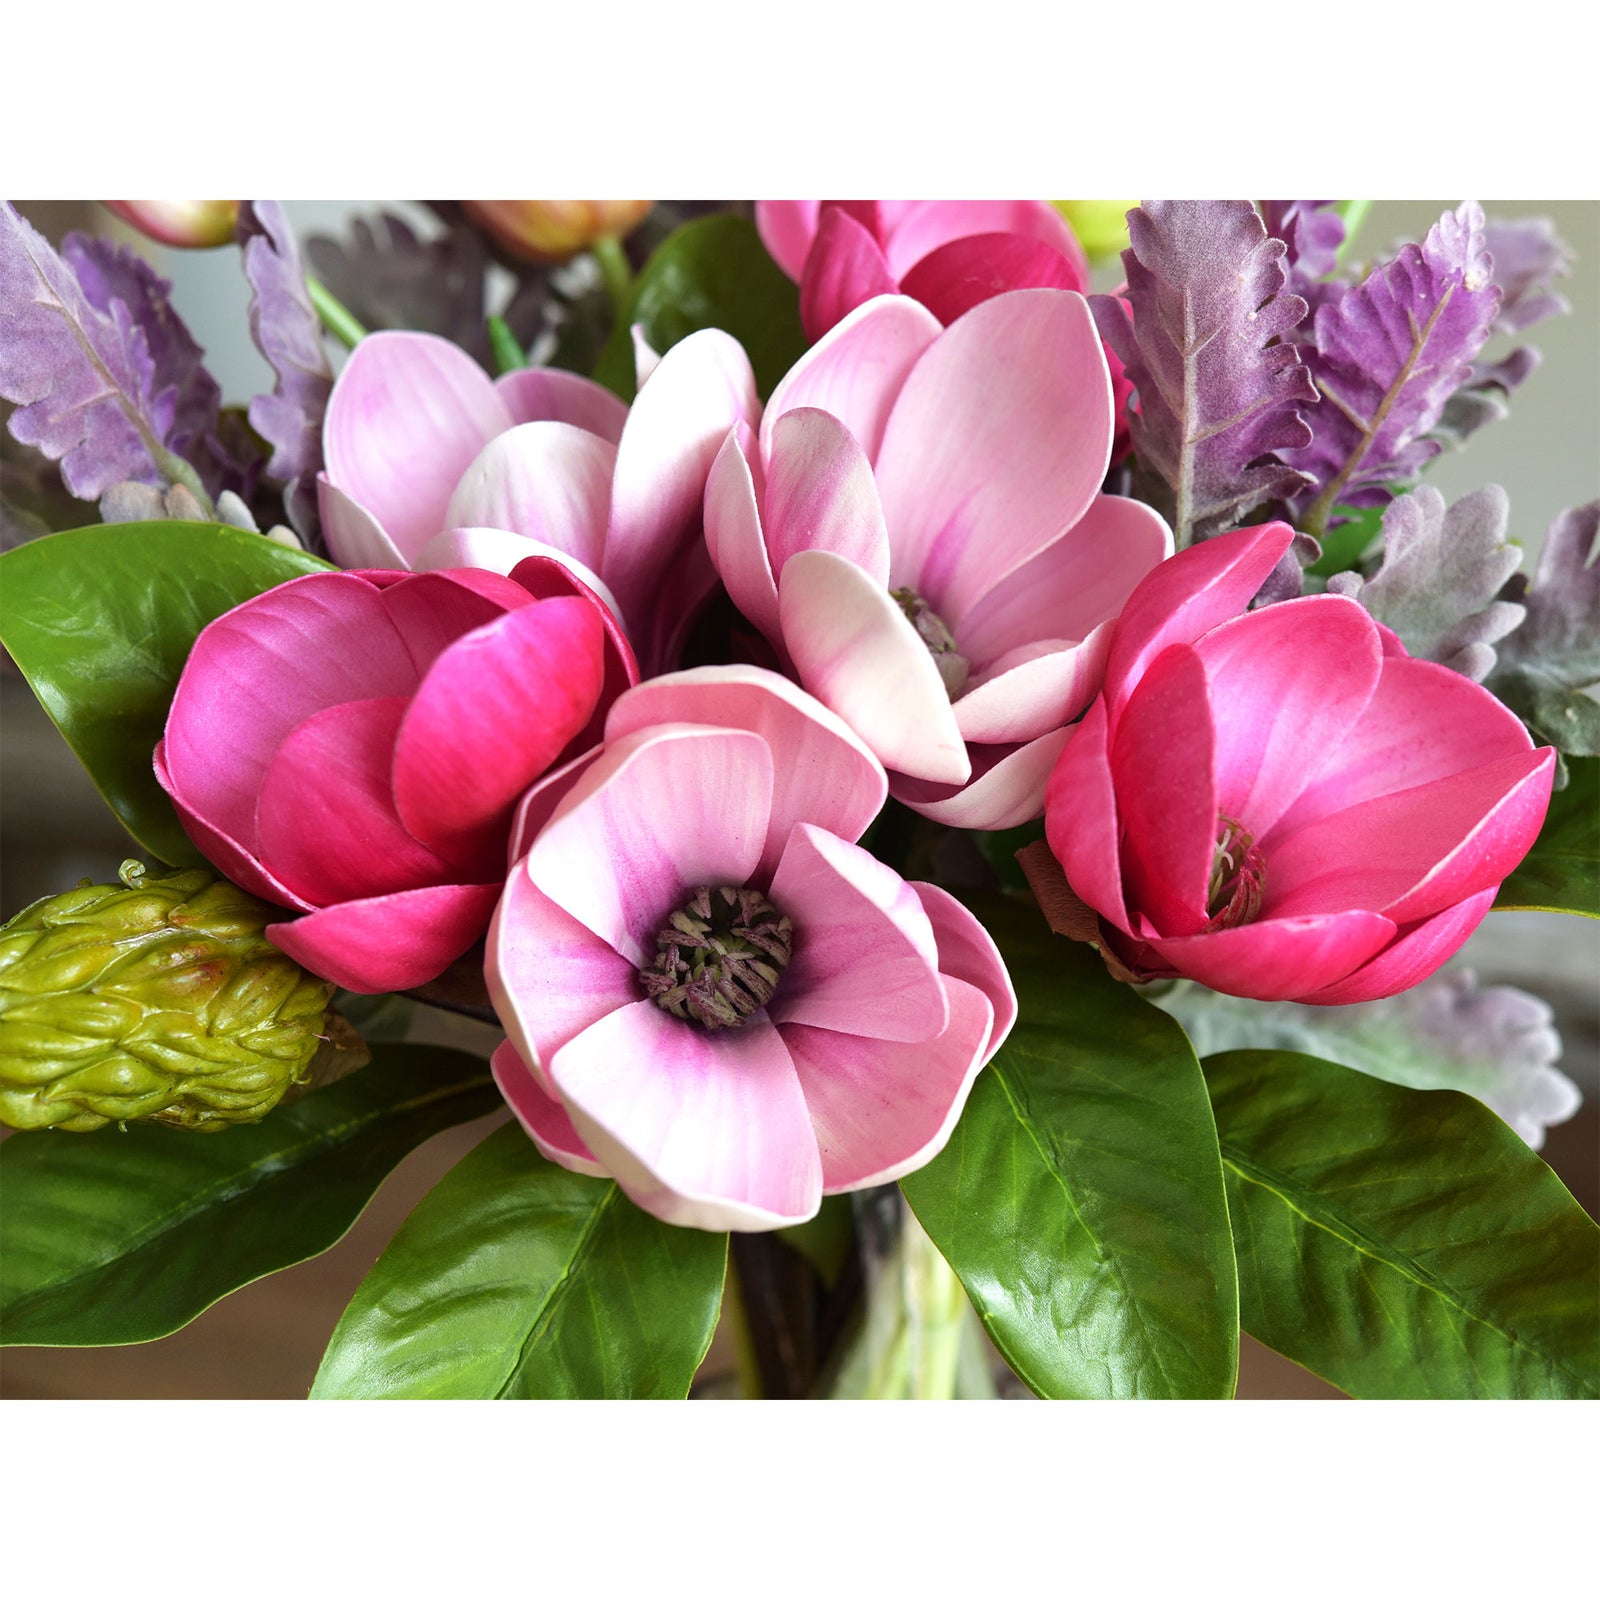 FiveSeasonStuff Magenta Passion Pink Magnolia Artificial Flowers Arrangement with 4 Stems, Wedding Bridesmaids Bouquet Home Decor